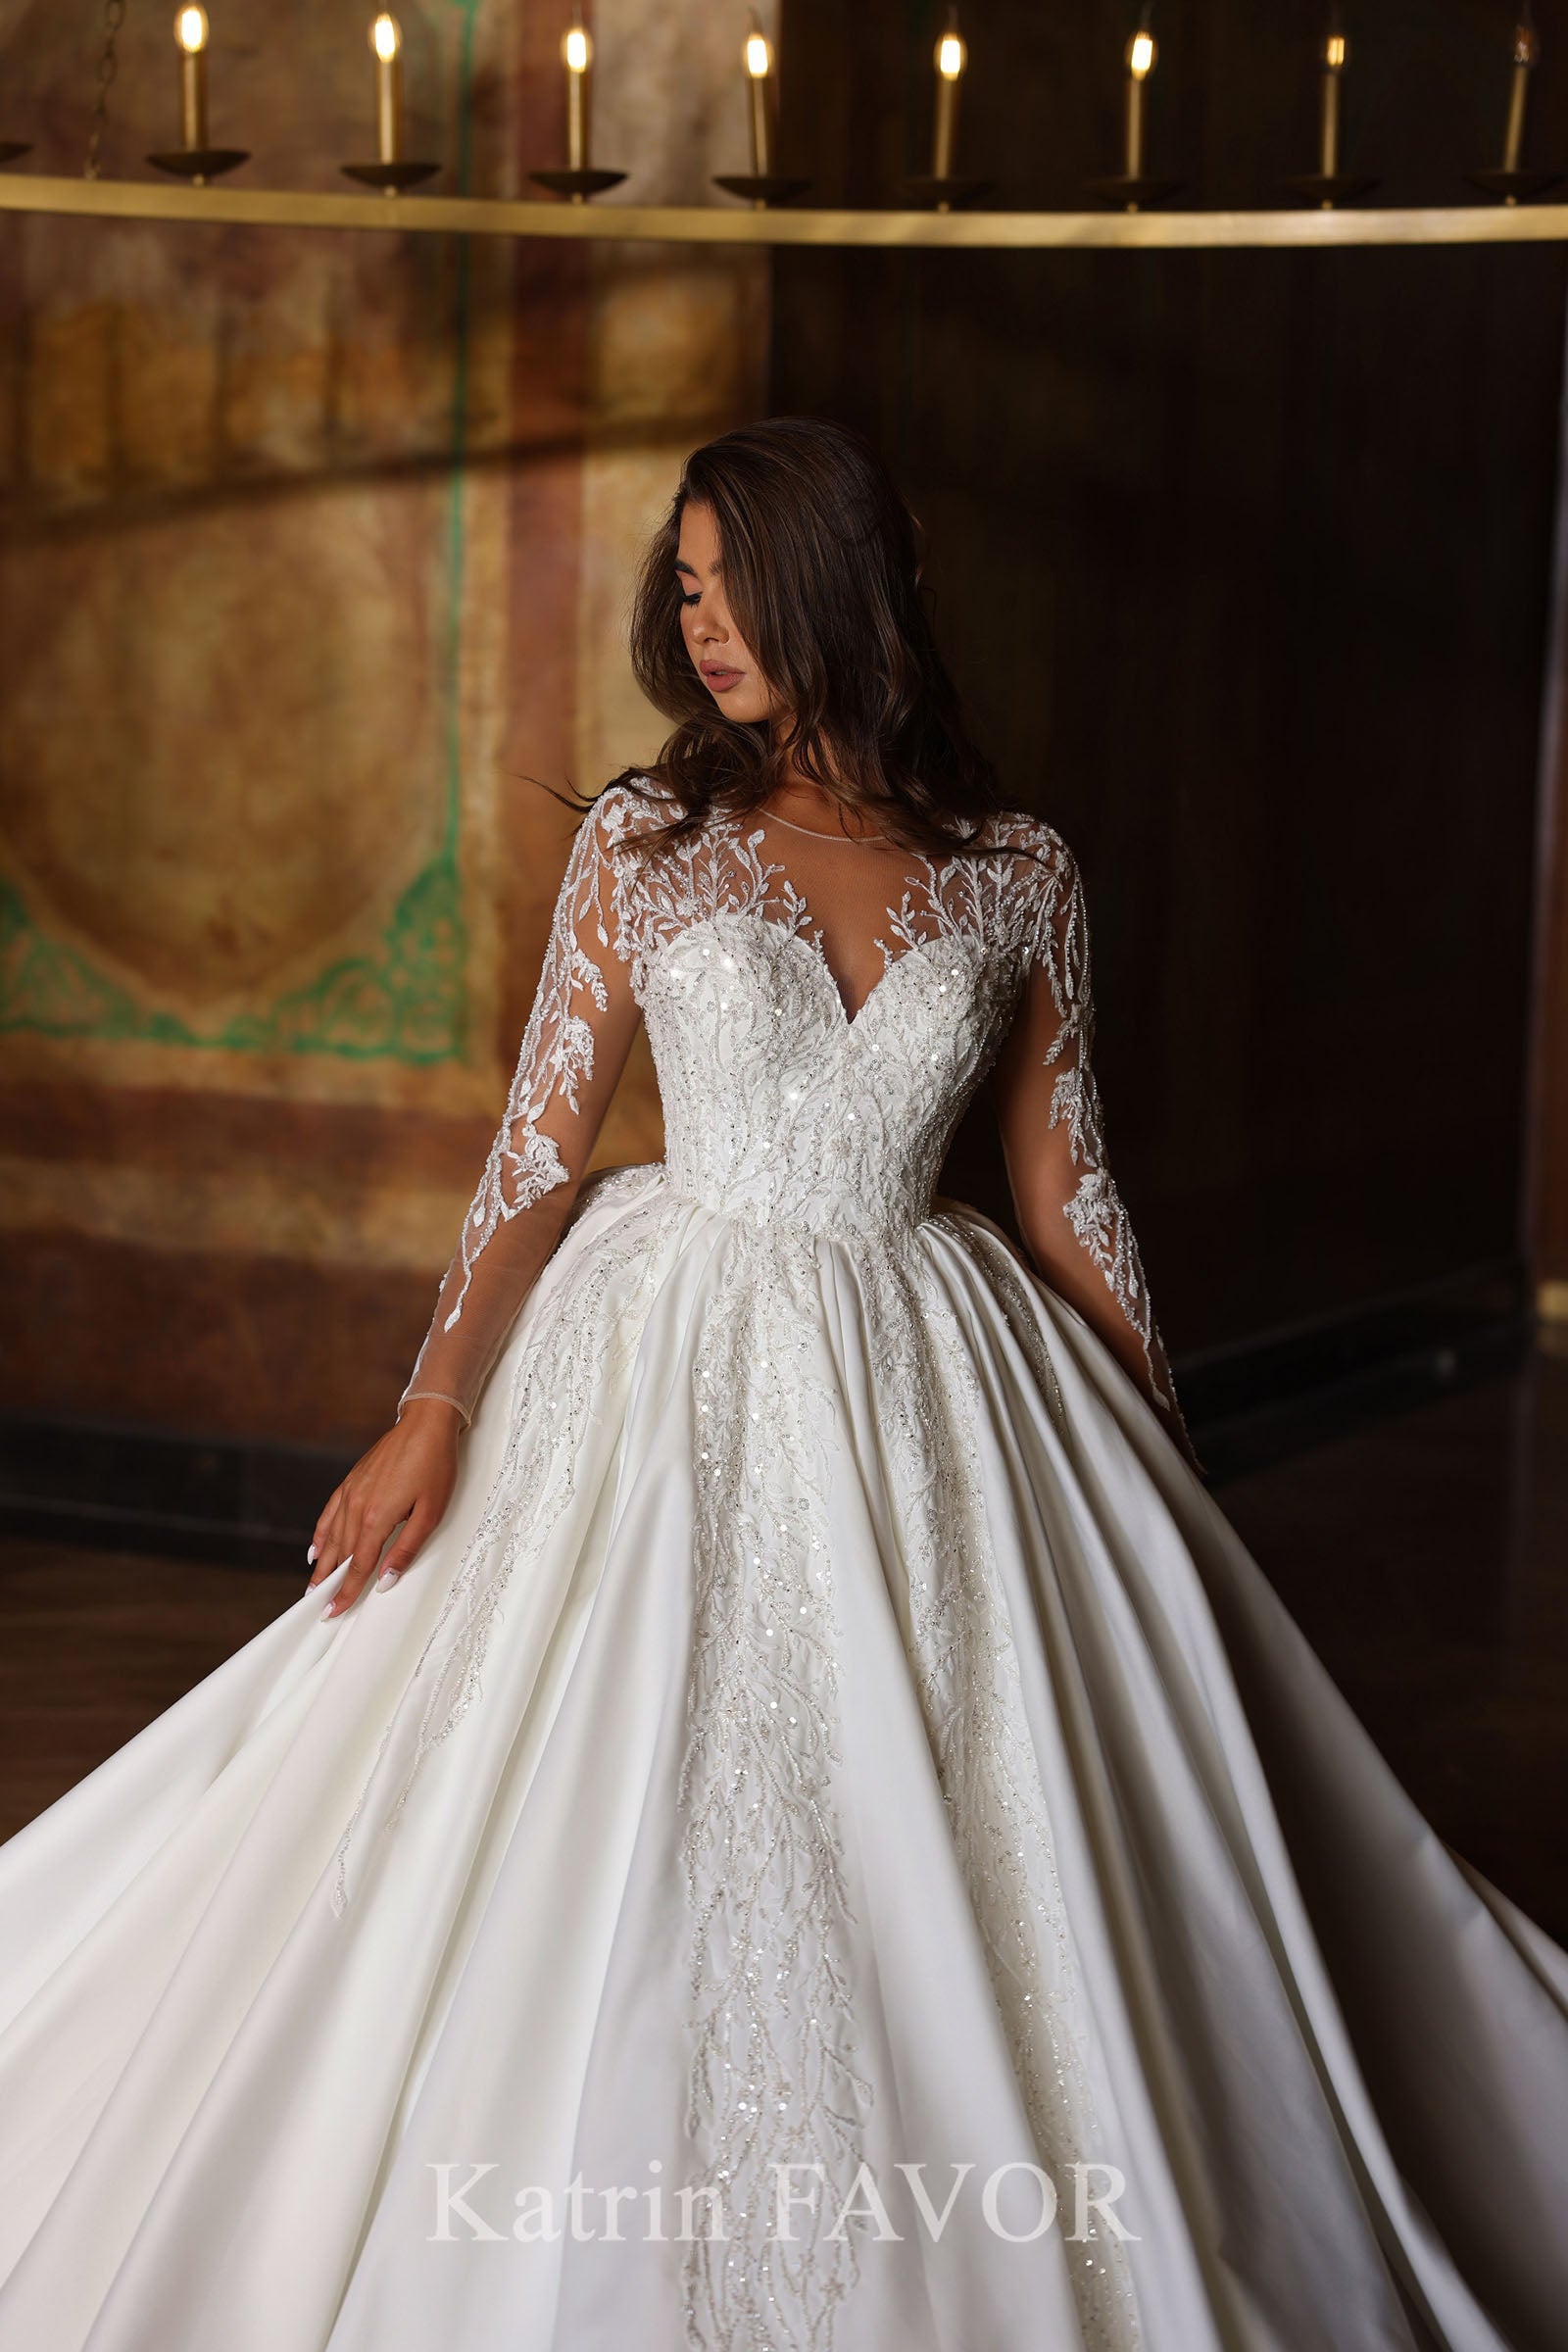 KatrinFAVORboutique-Princess ballgown satin wedding dress